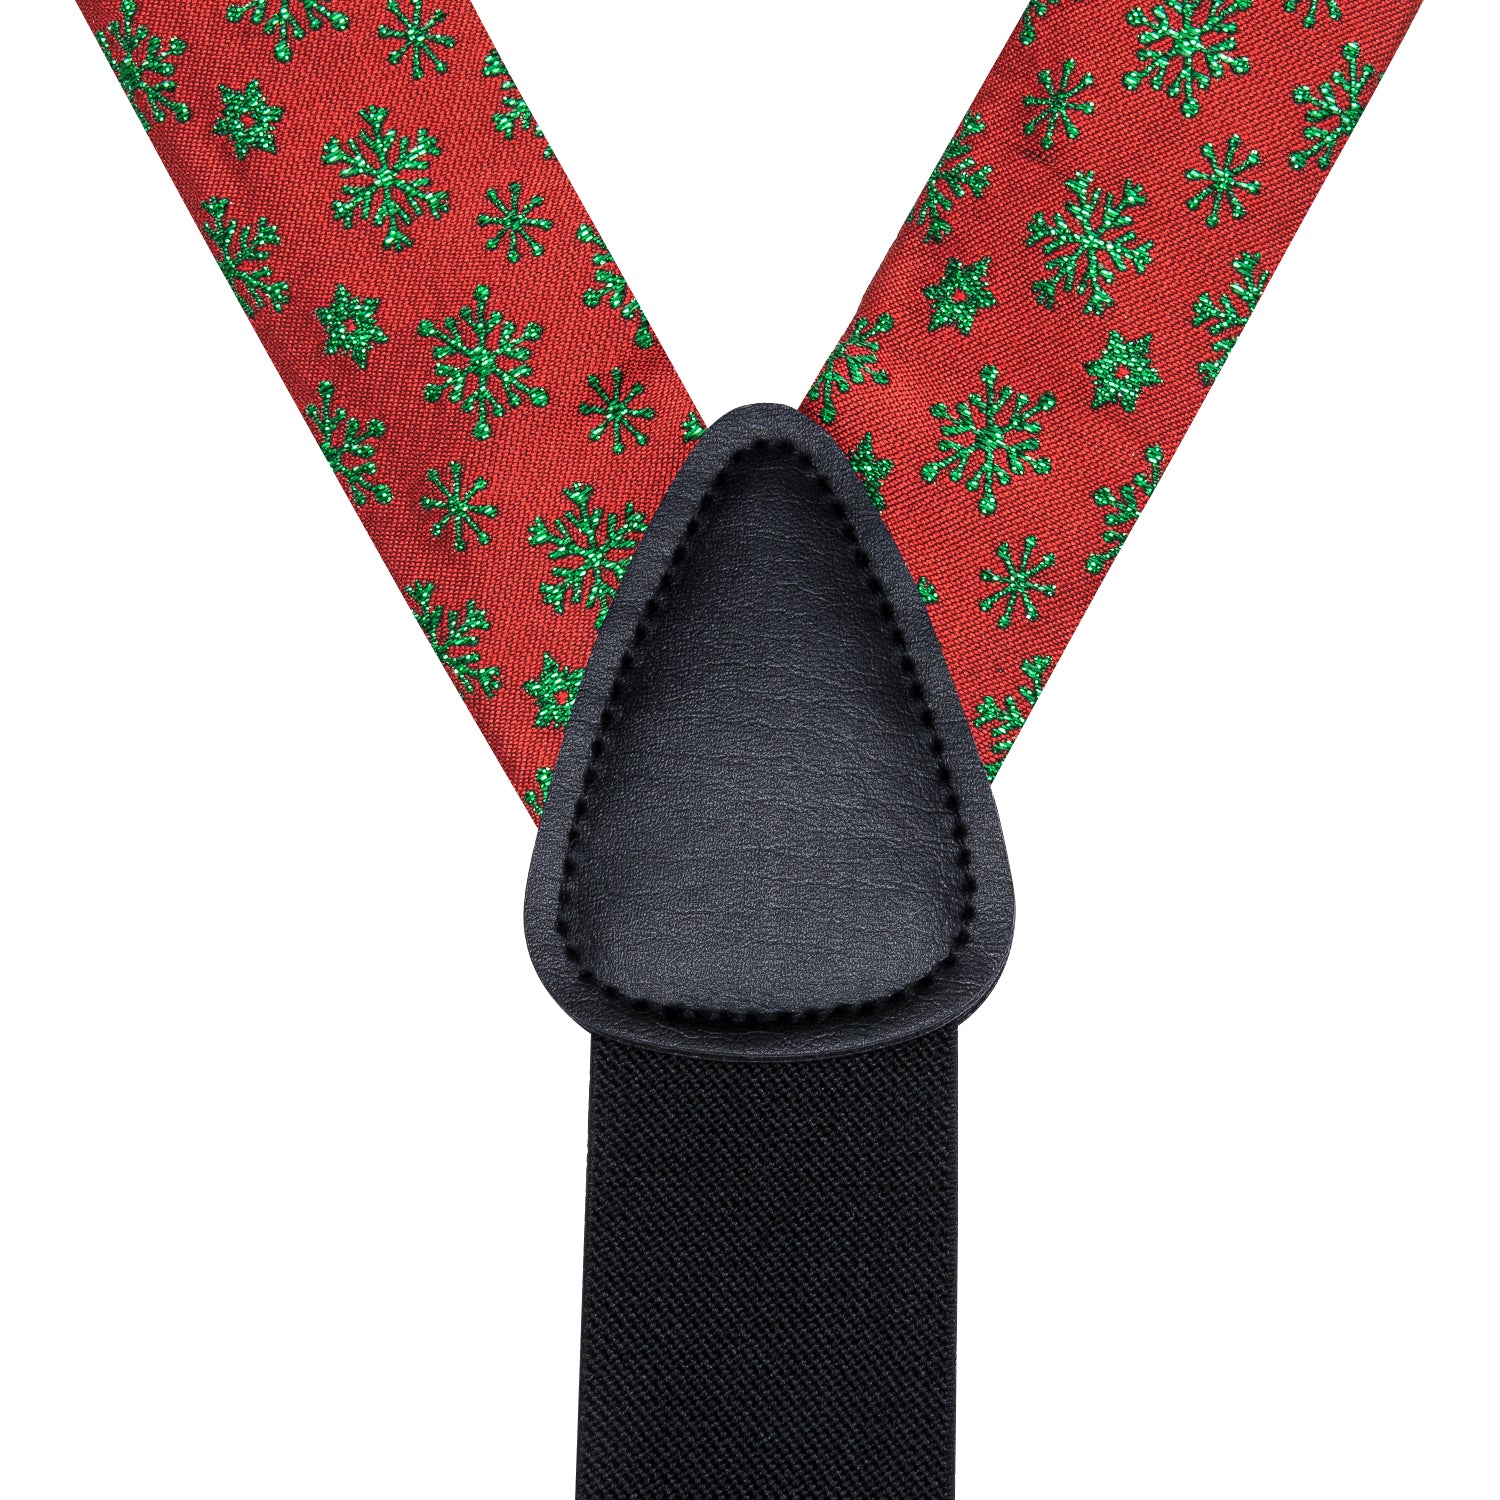 Red Green Christmas Snowflakes Suspender Bowtie Hanky Cufflinks Set